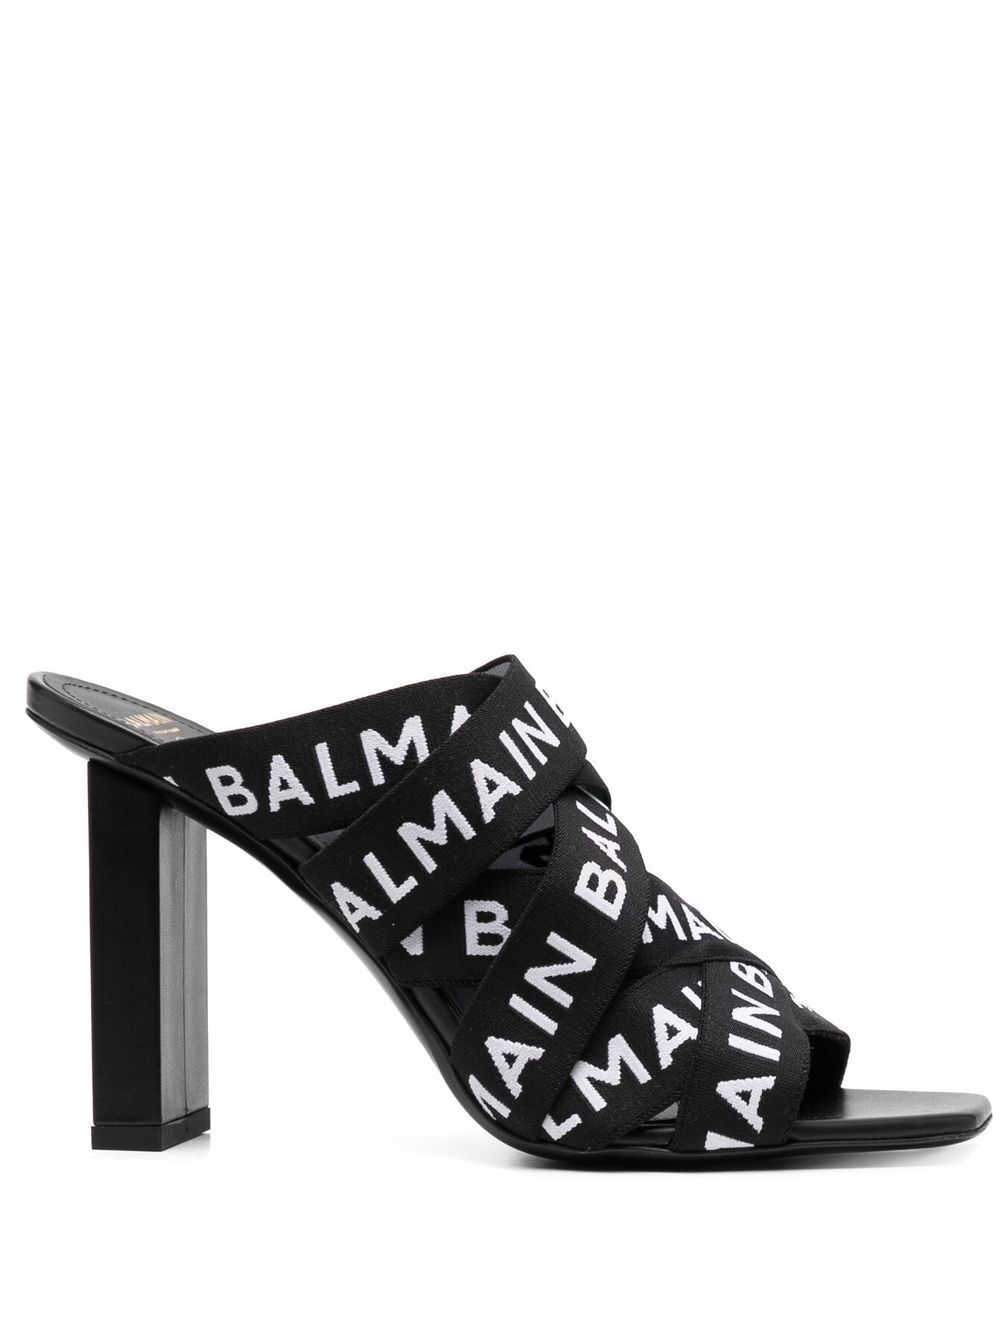 Balmain logo strappy sandals - Black